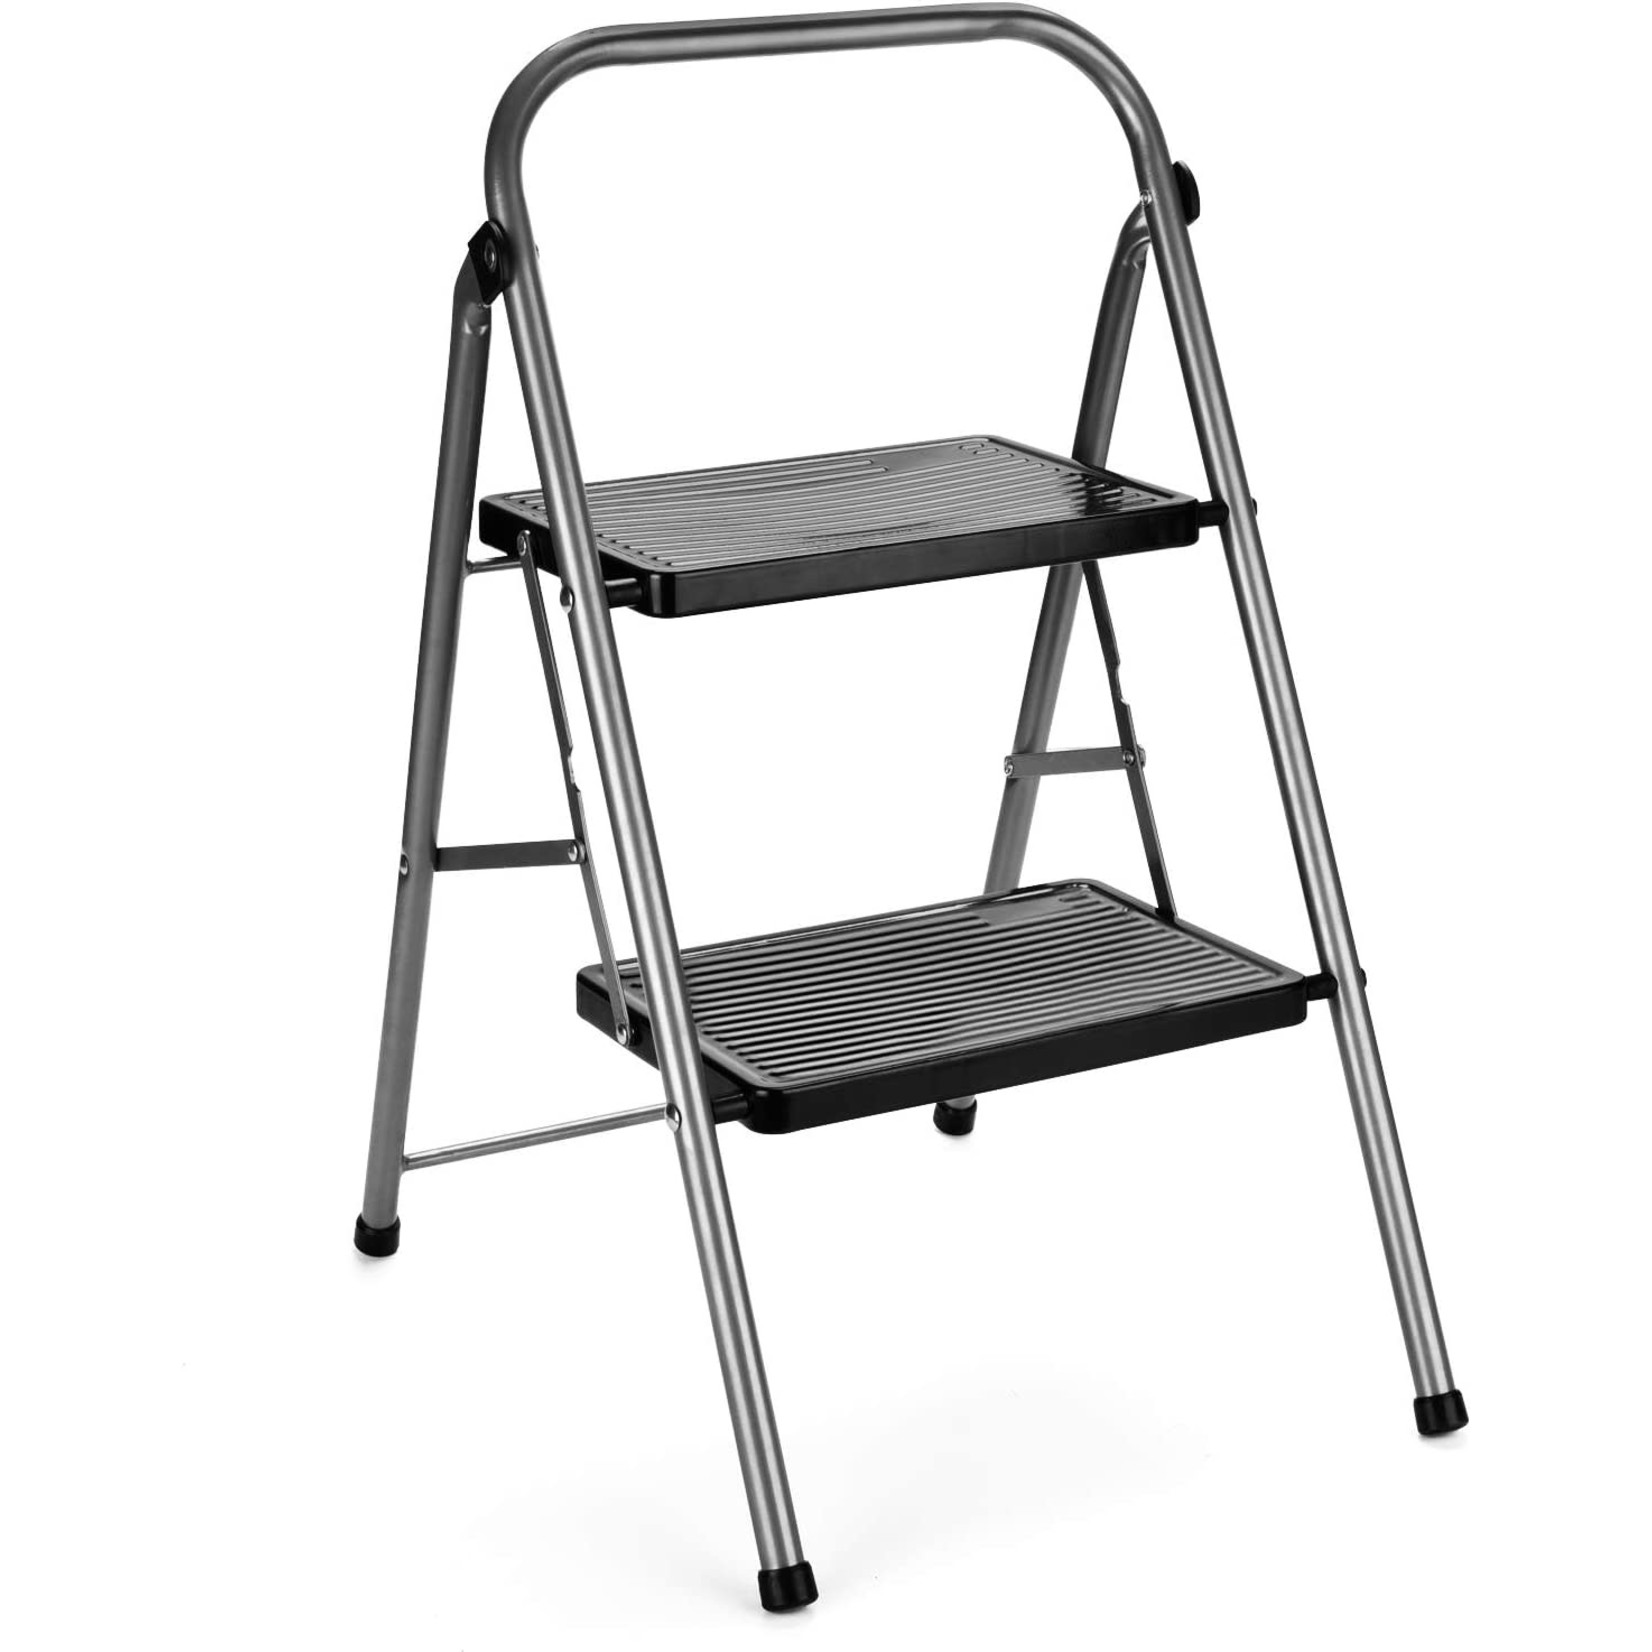 2 Step Ladder Folding Step Stool 2 Steps Stepstool with Handrails Wide Pedal,Heavy Duty Sturdy